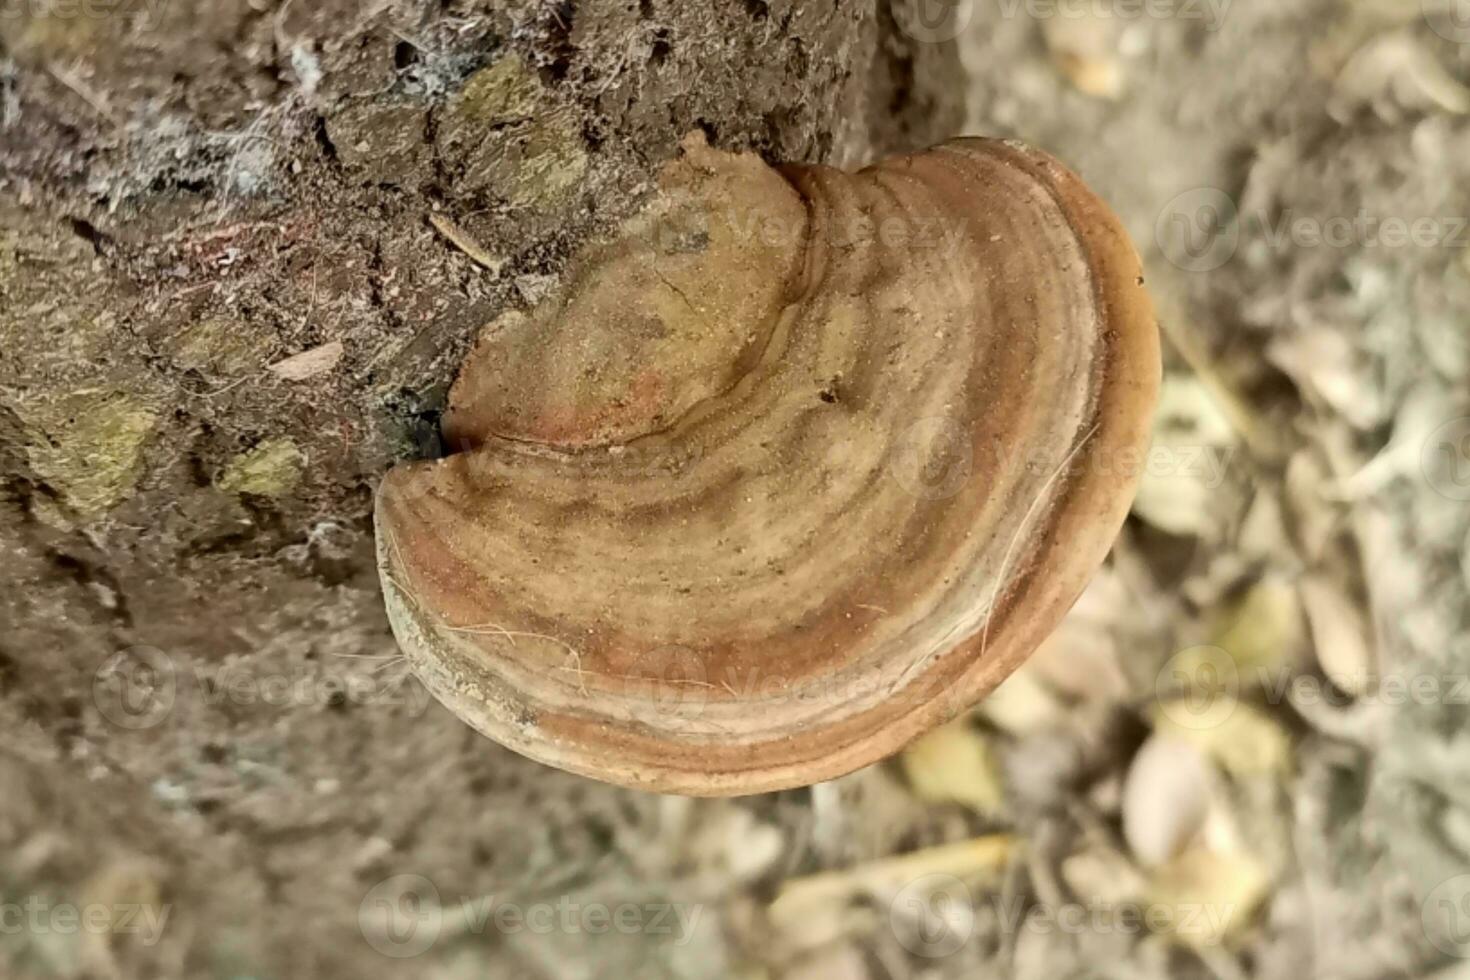 Artist's bracket. ganoderma applanatum is a bracket fungus with a cosmopolitan distribution. photo